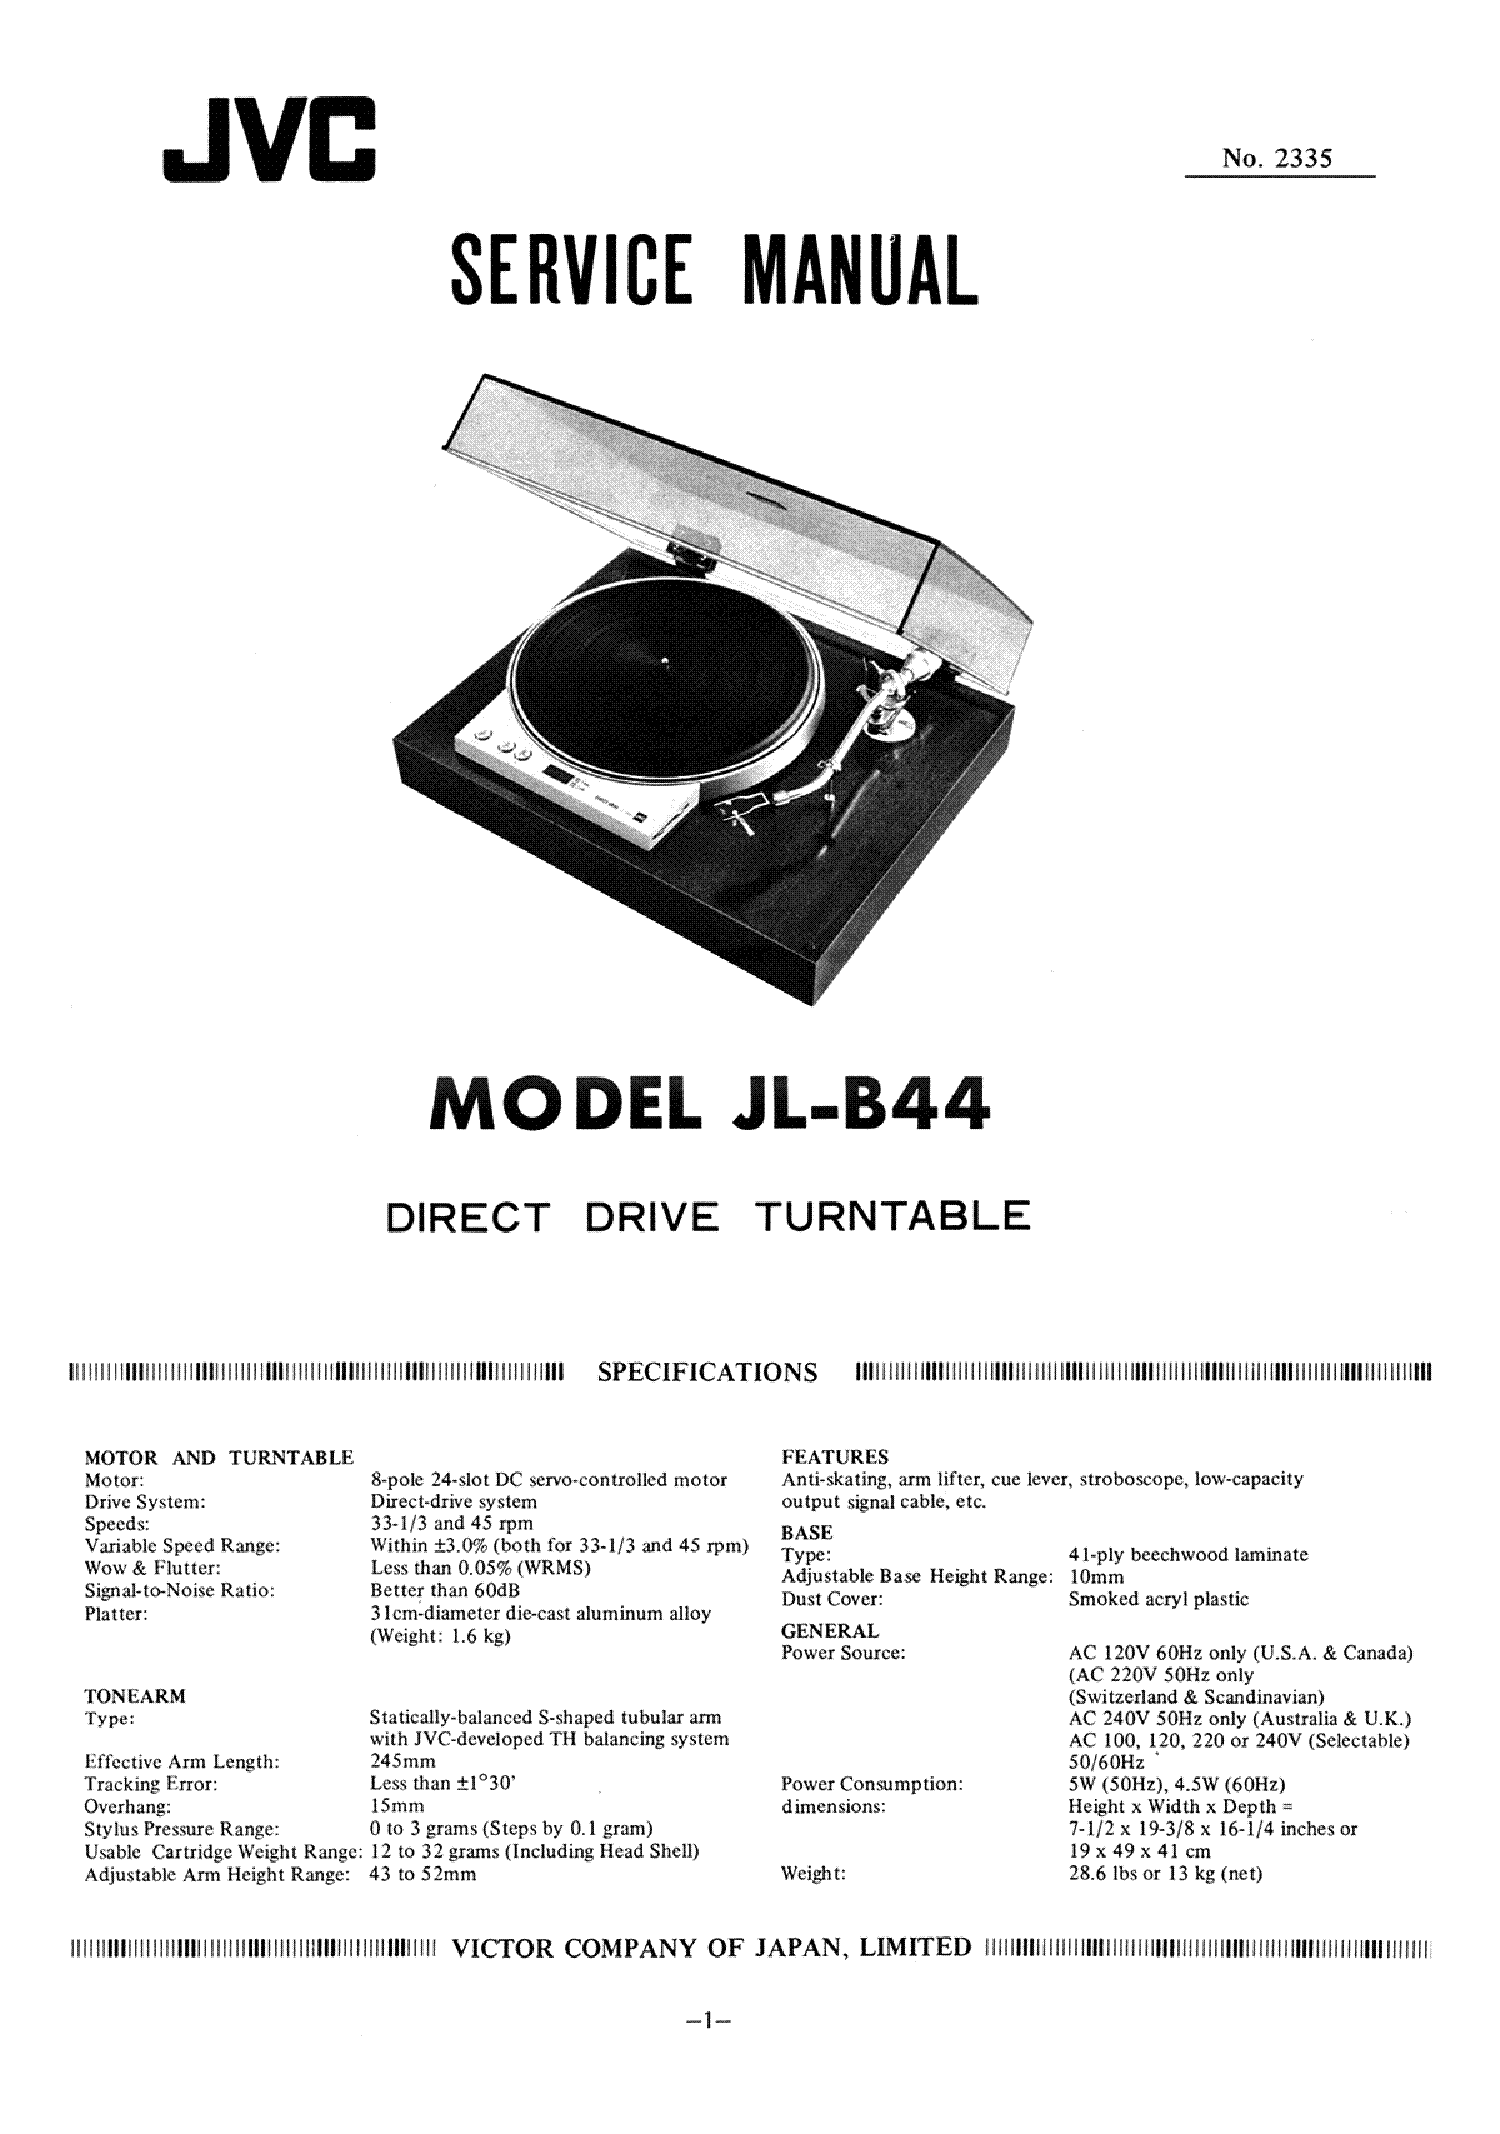 JVC JL-B44 TURNTABLE service manual (1st page)